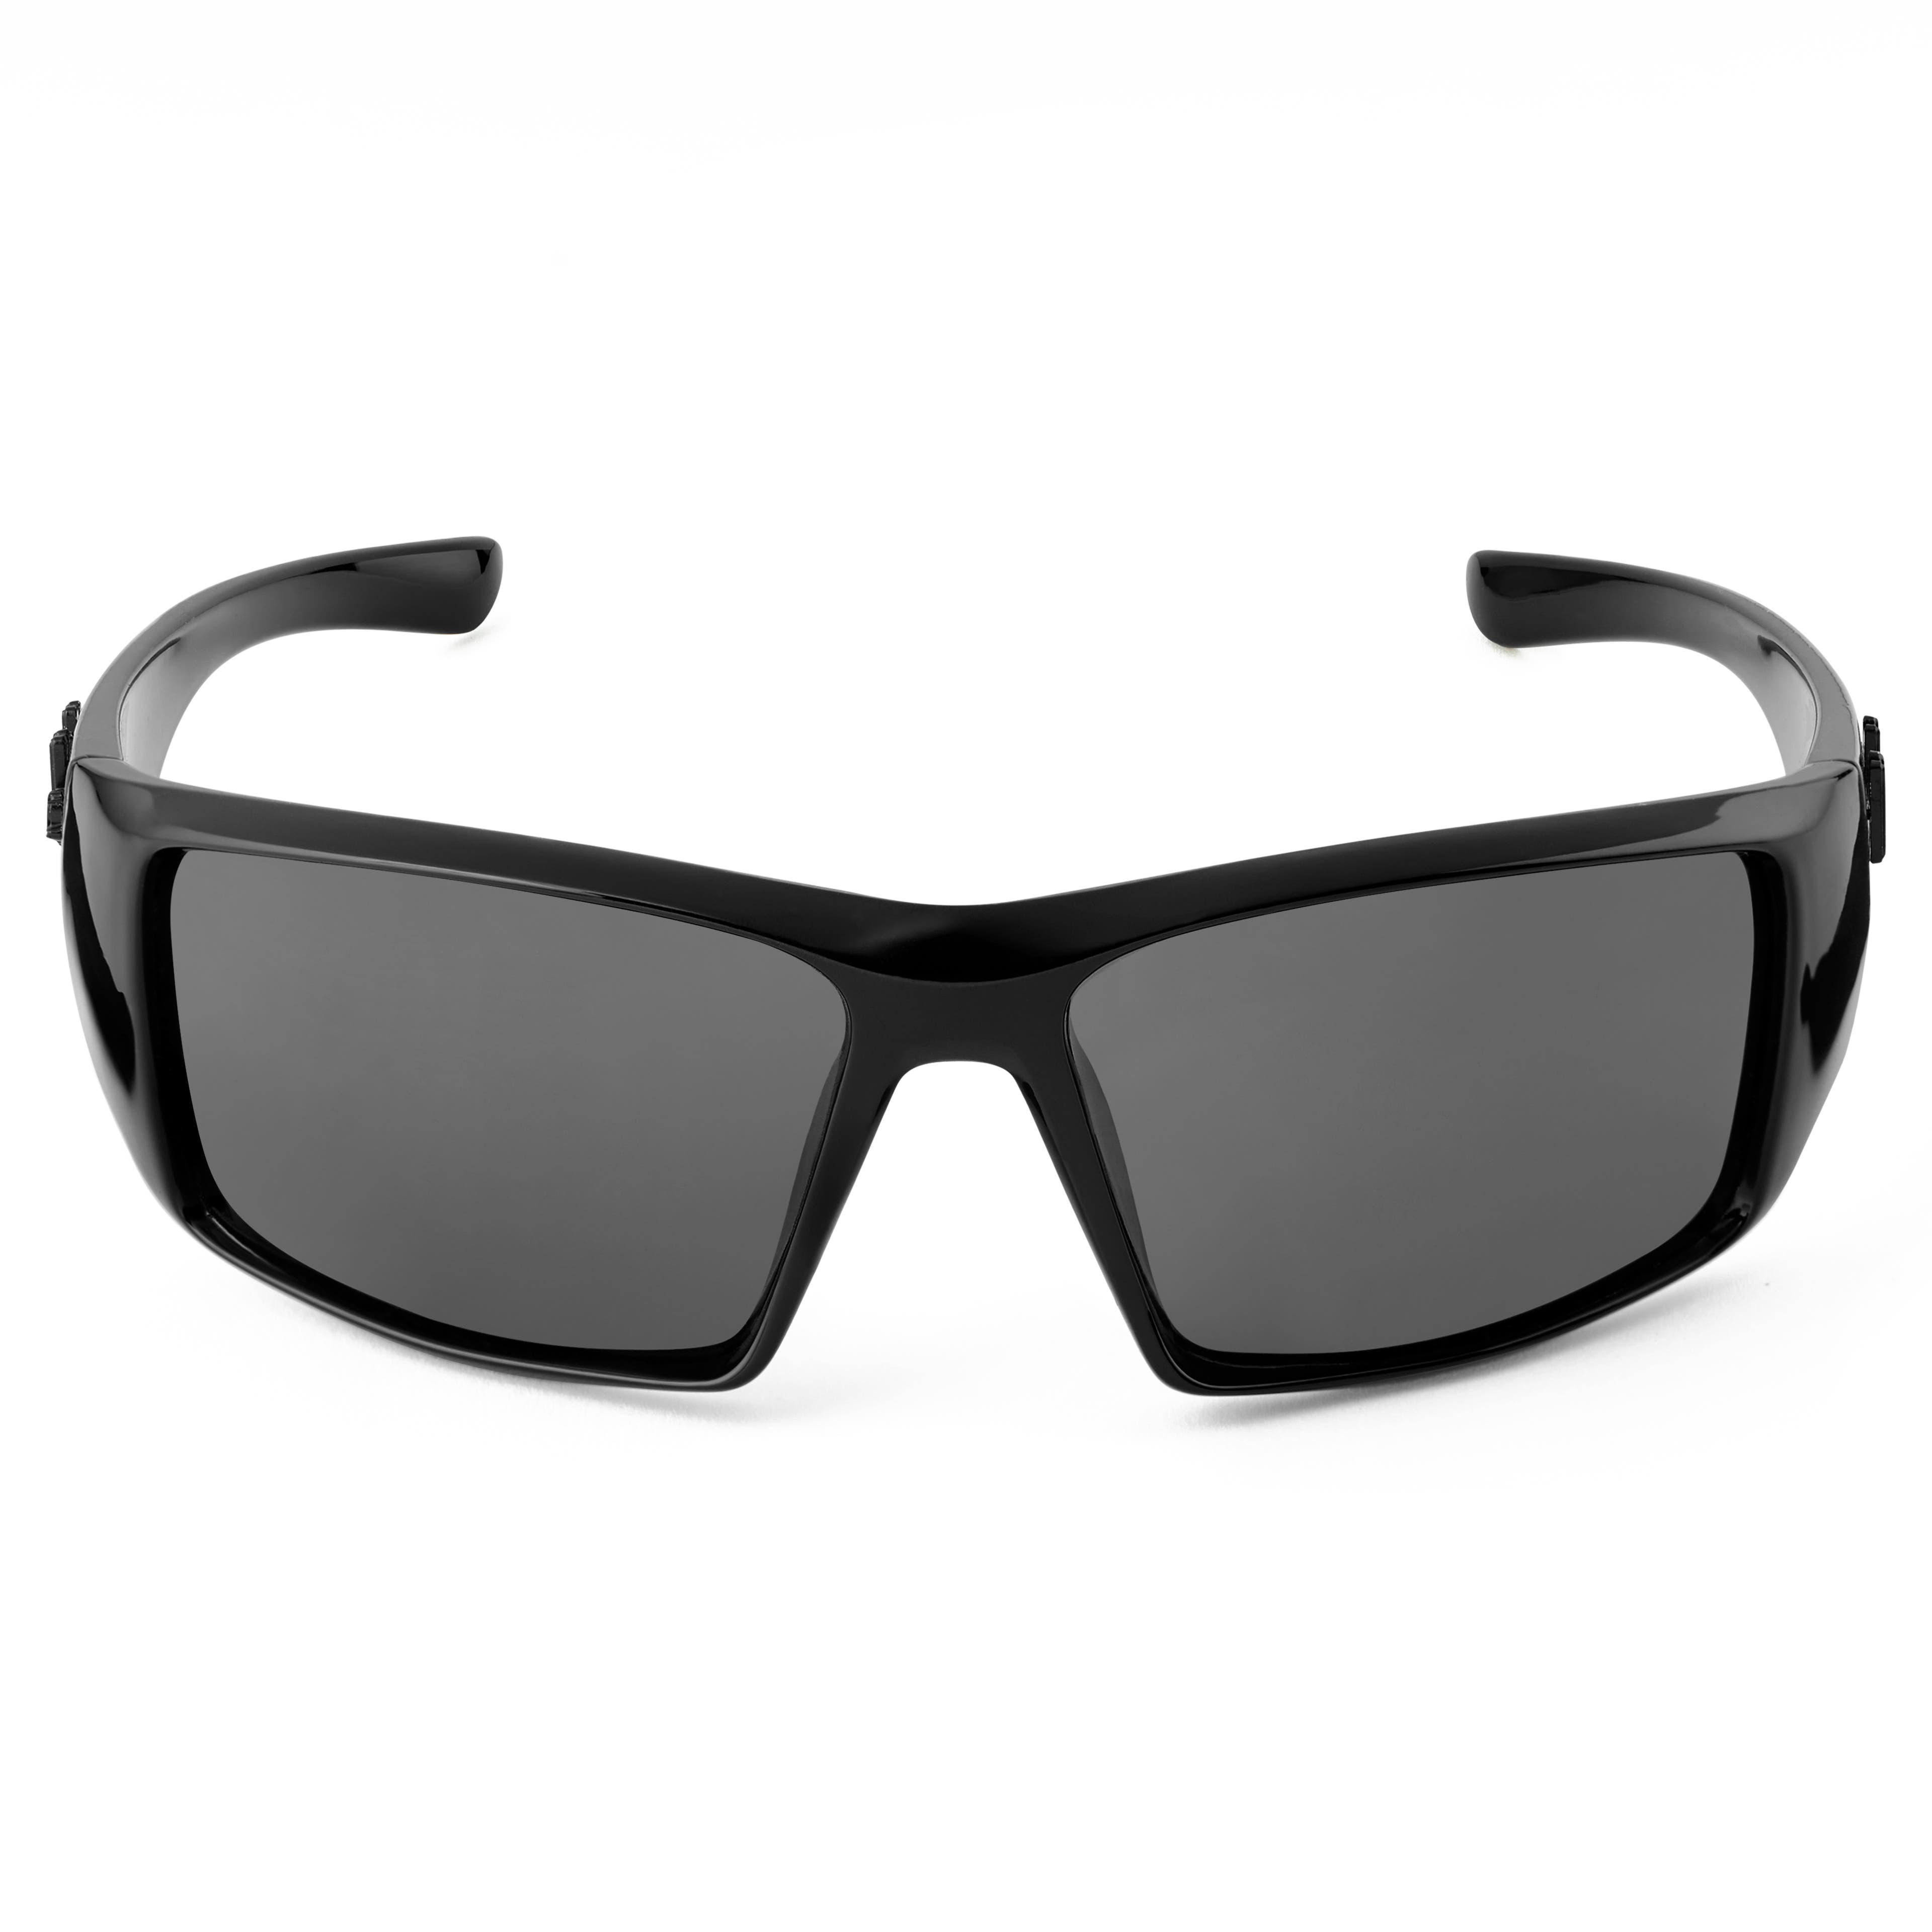 Mick Verge Black & Grey Polarised Sunglasses – Category 3.5